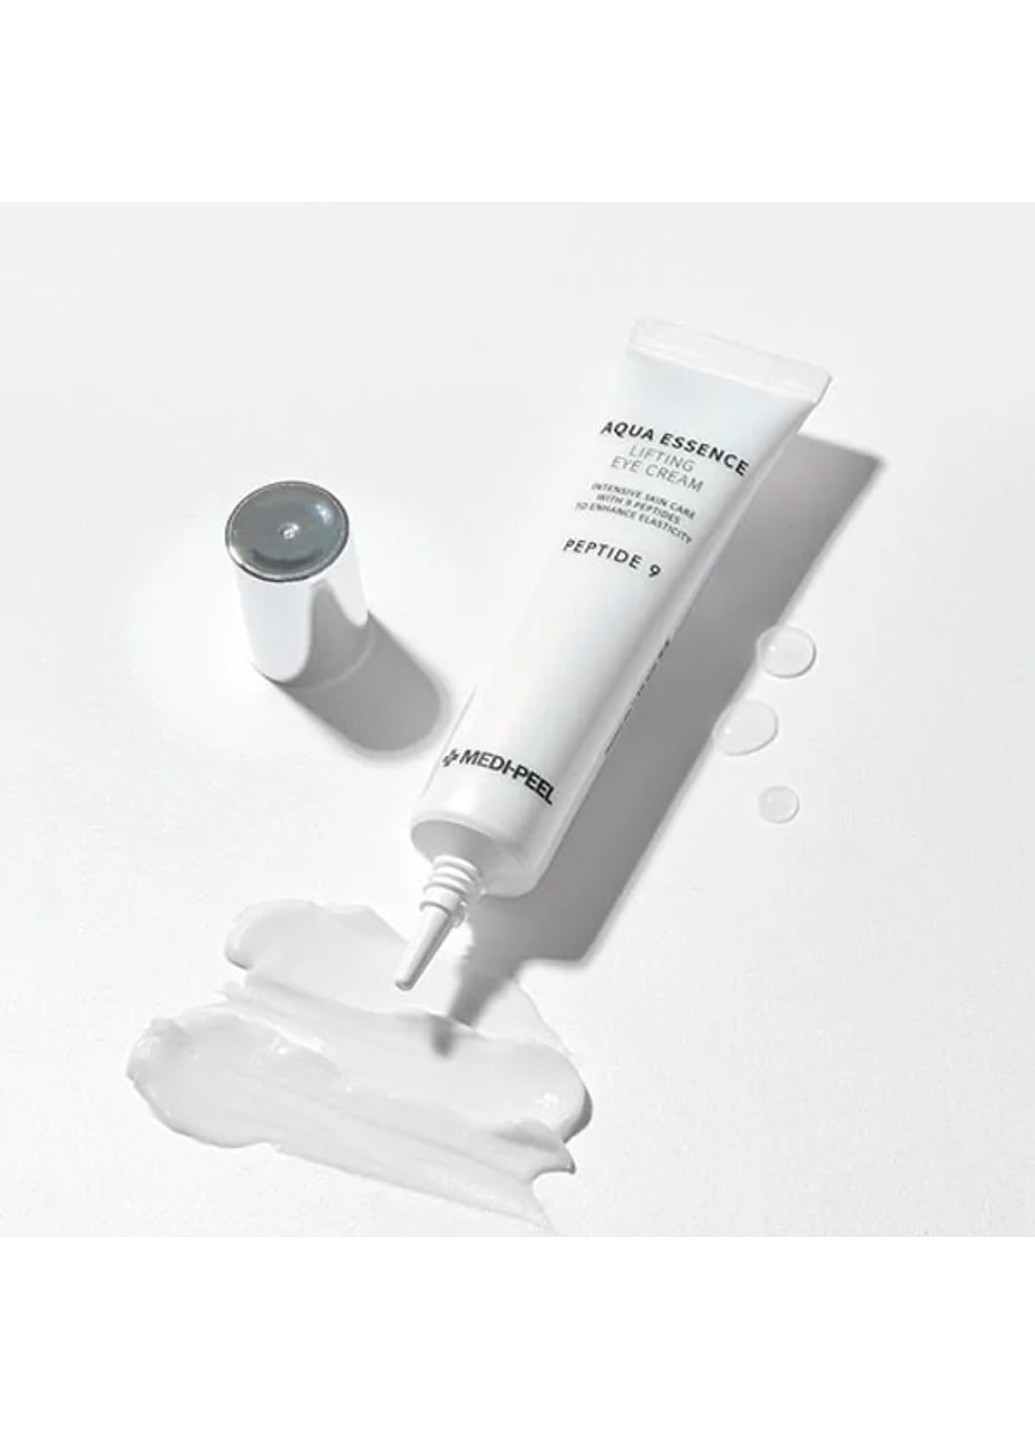 Лифтинг крем для кожи вокруг глаз с пептидами Peptide9 Aqua Essence Lifting Eye Cream 40 мл Medi-Peel (259811917)